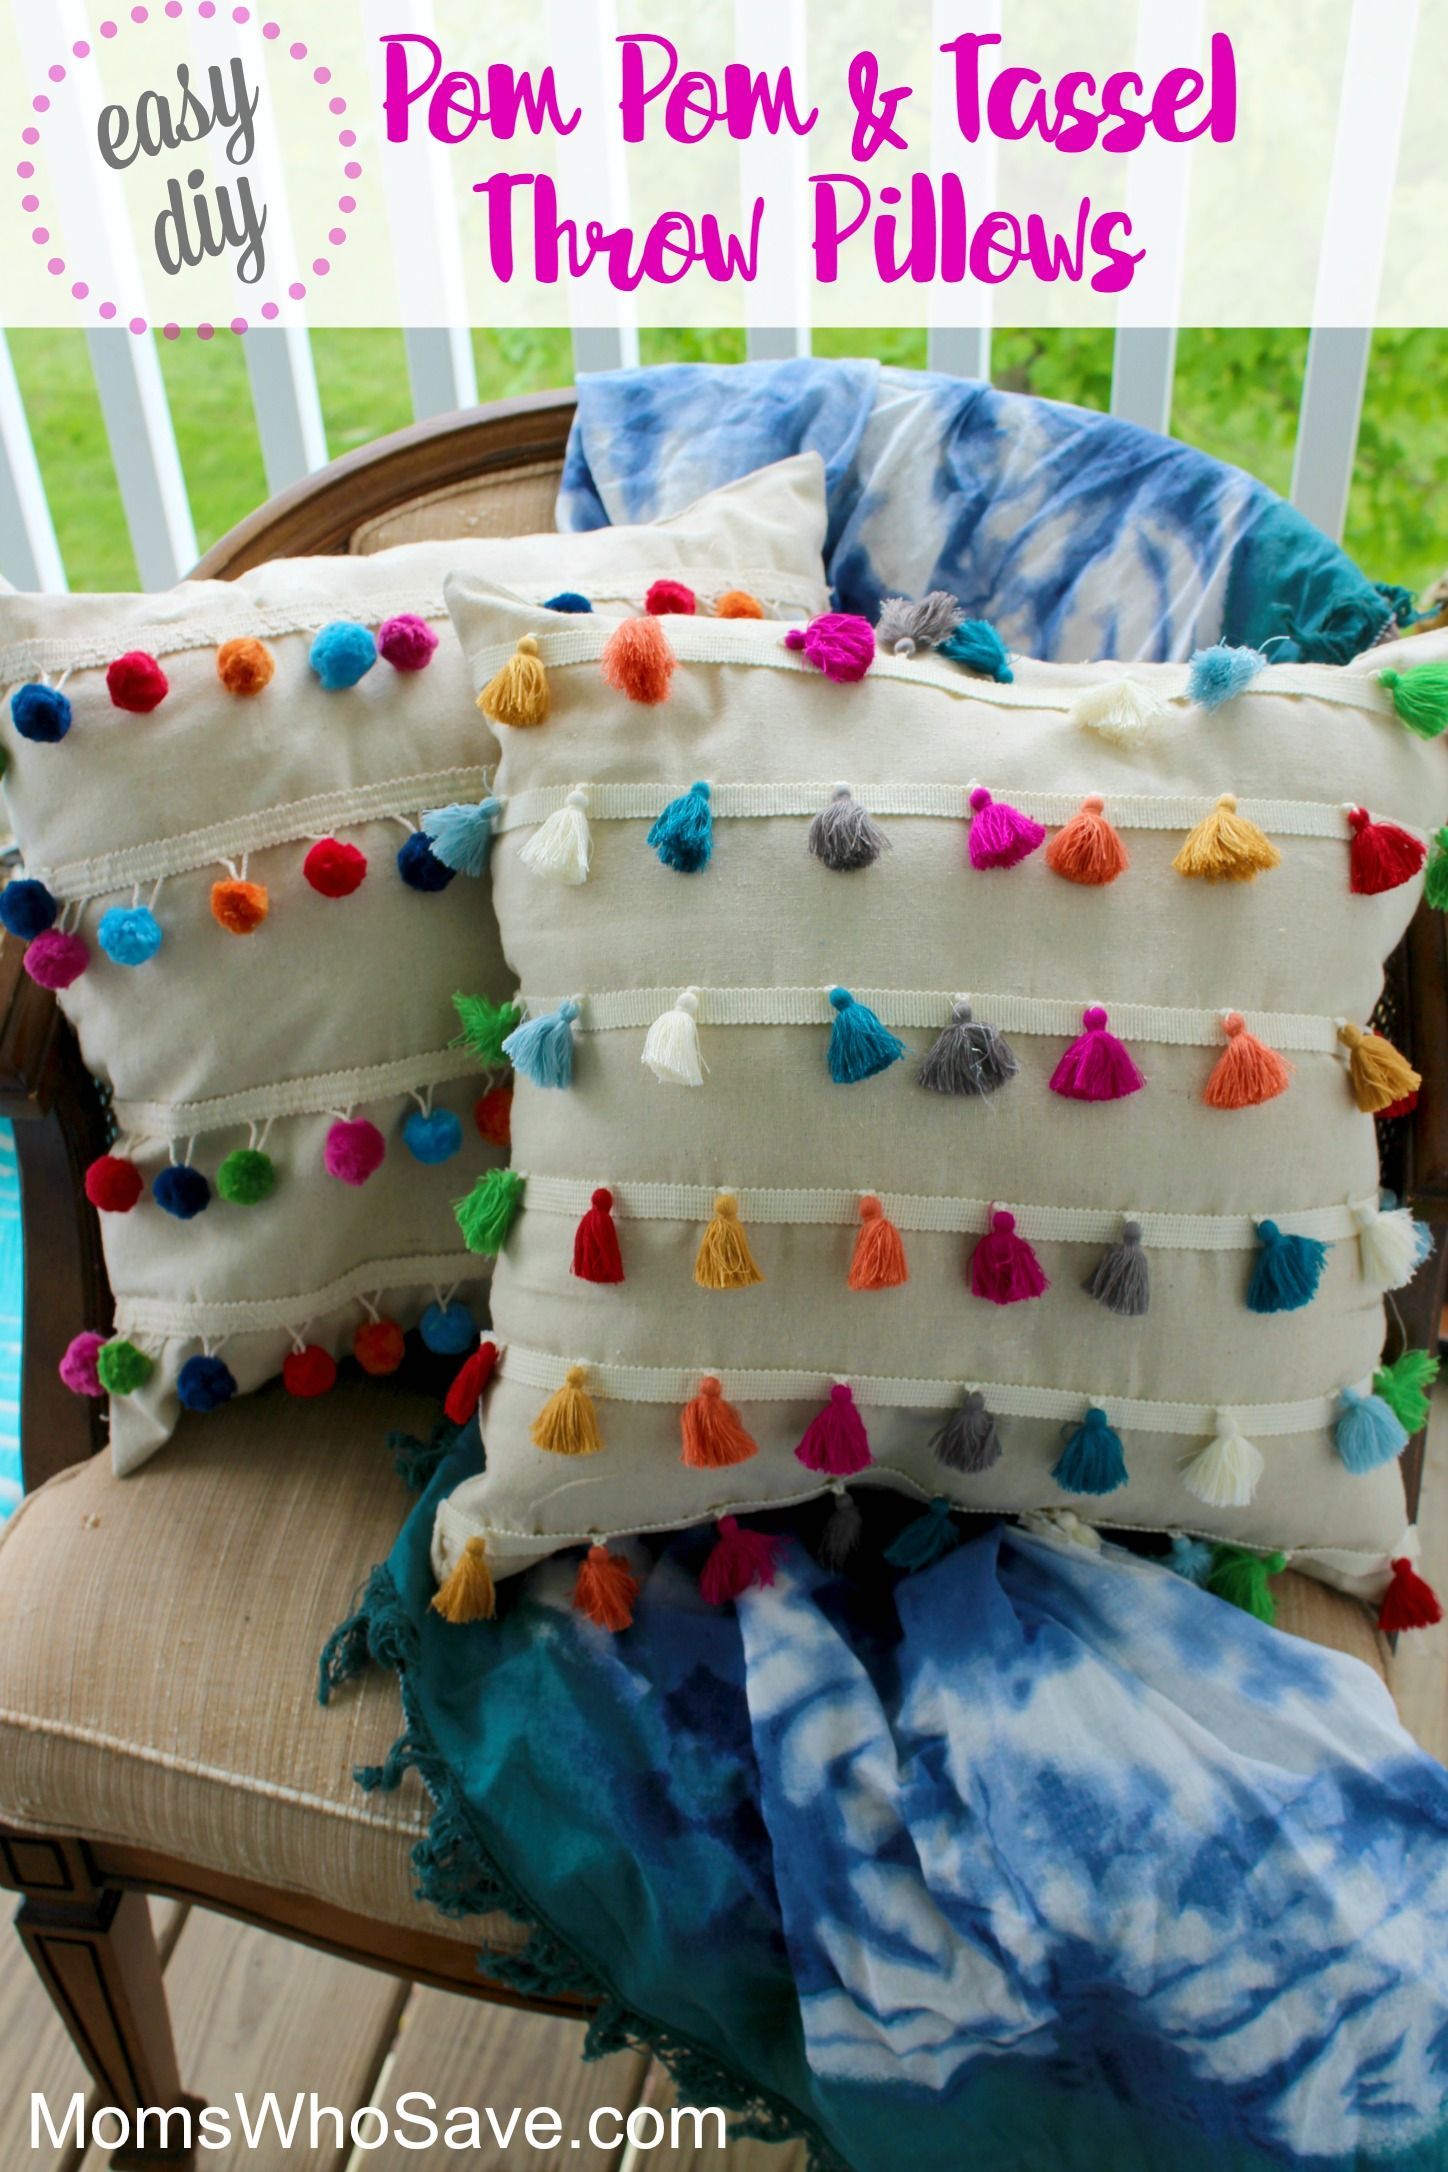 18 diy Pillows decorative ideas